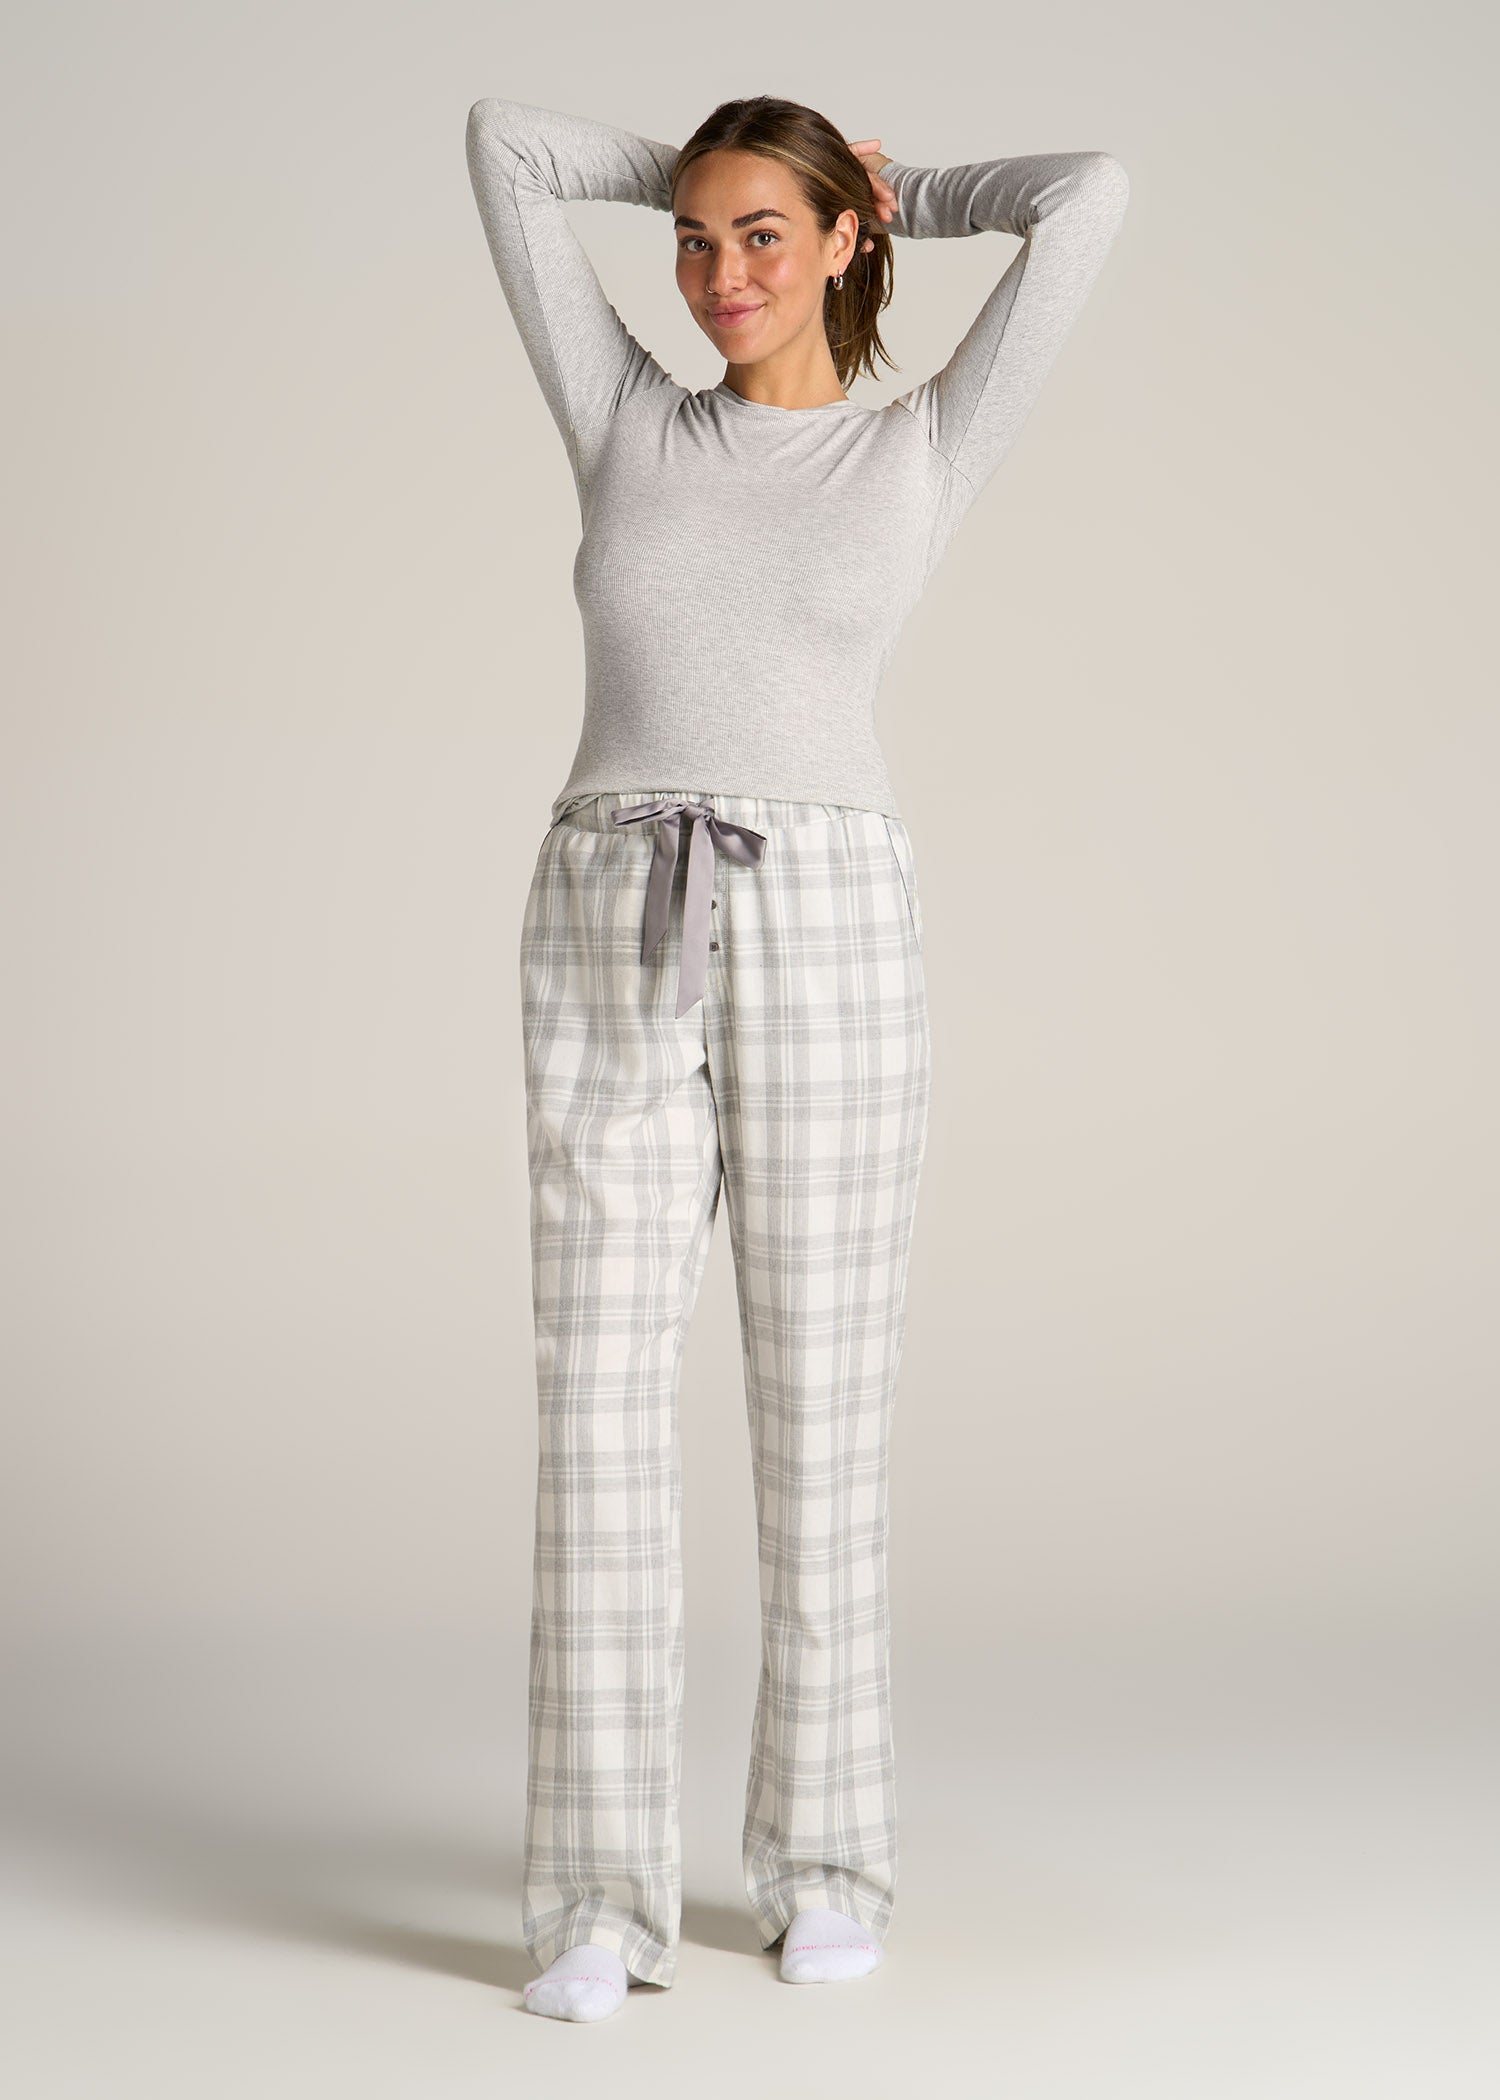 Pajama Pants For Women,Womens Pajama Pants Plaid Pants For Women